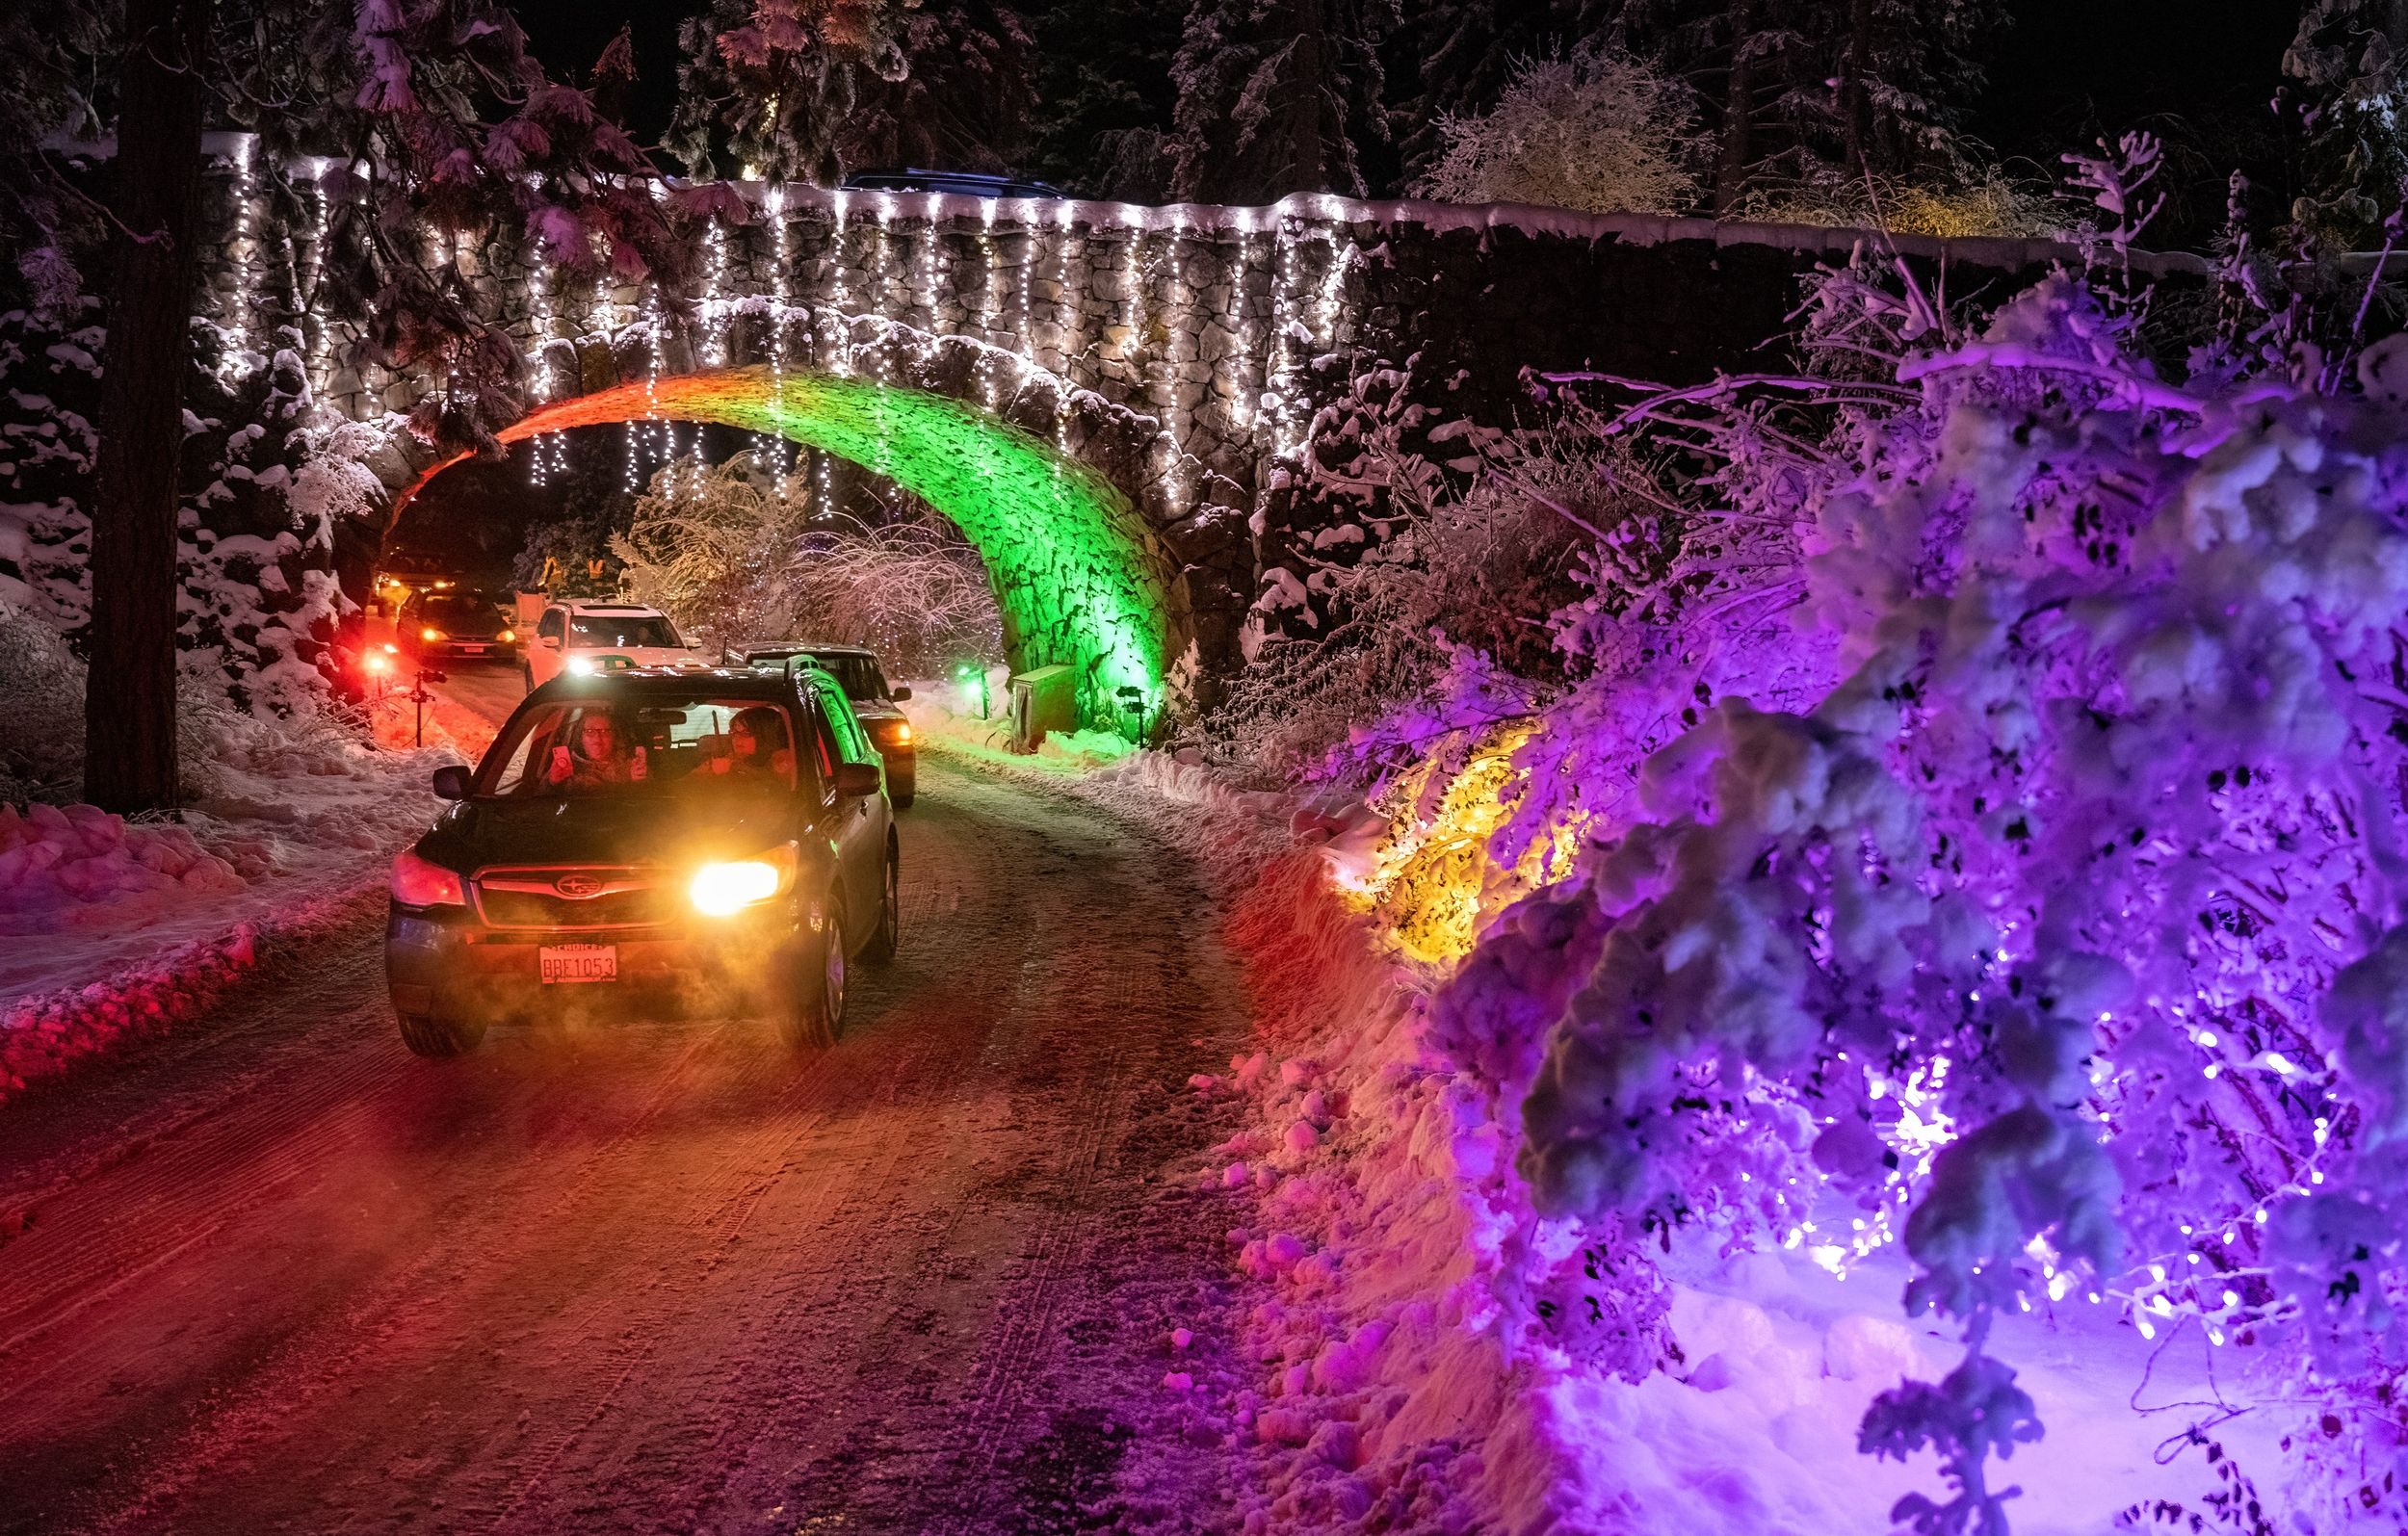 Manito Park holiday lights drivethru display returns for third year